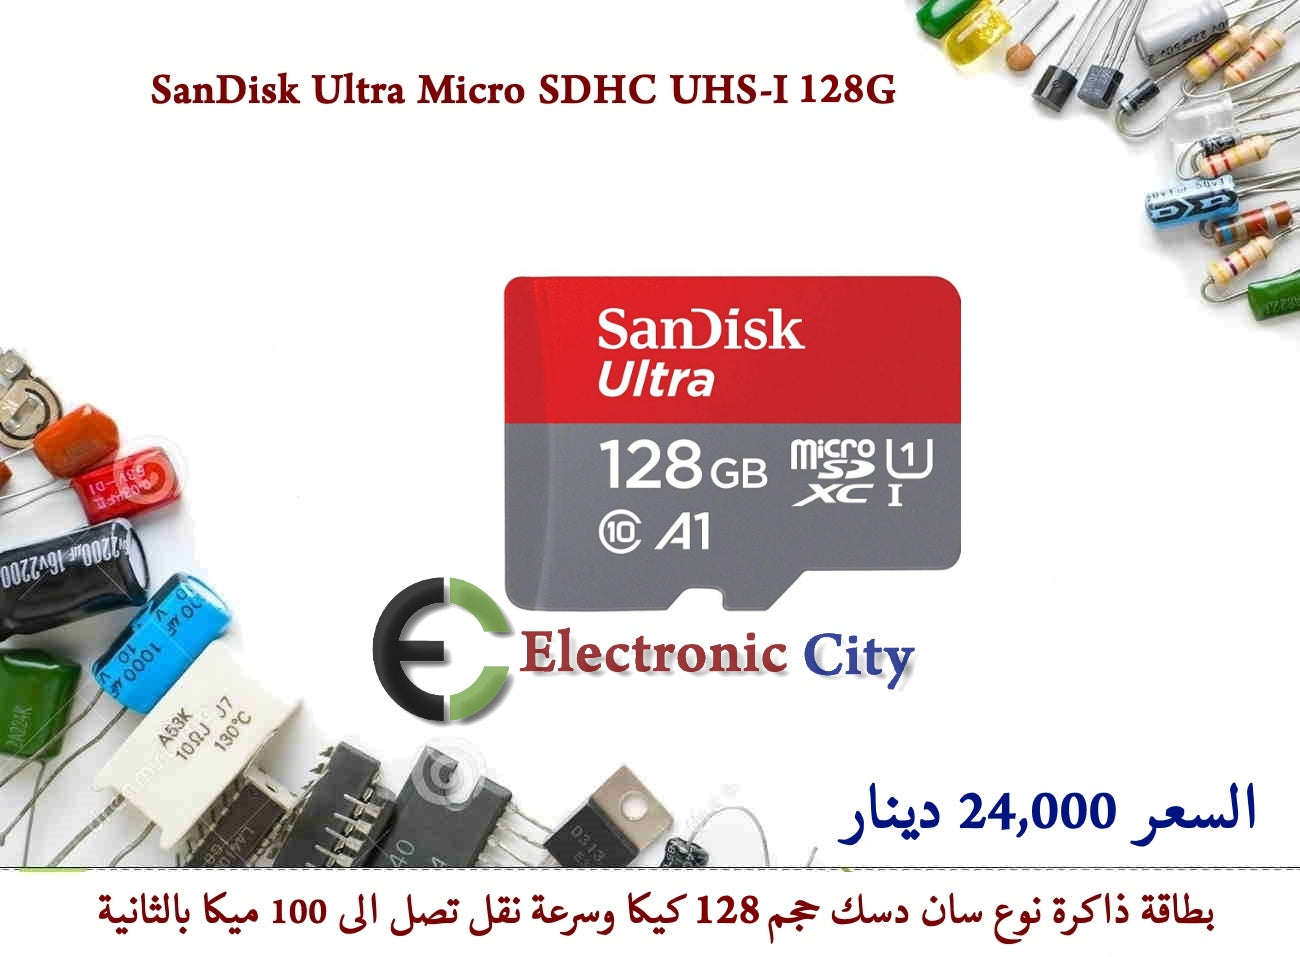 SanDisk Ultra Micro SDHC UHS-I 128G